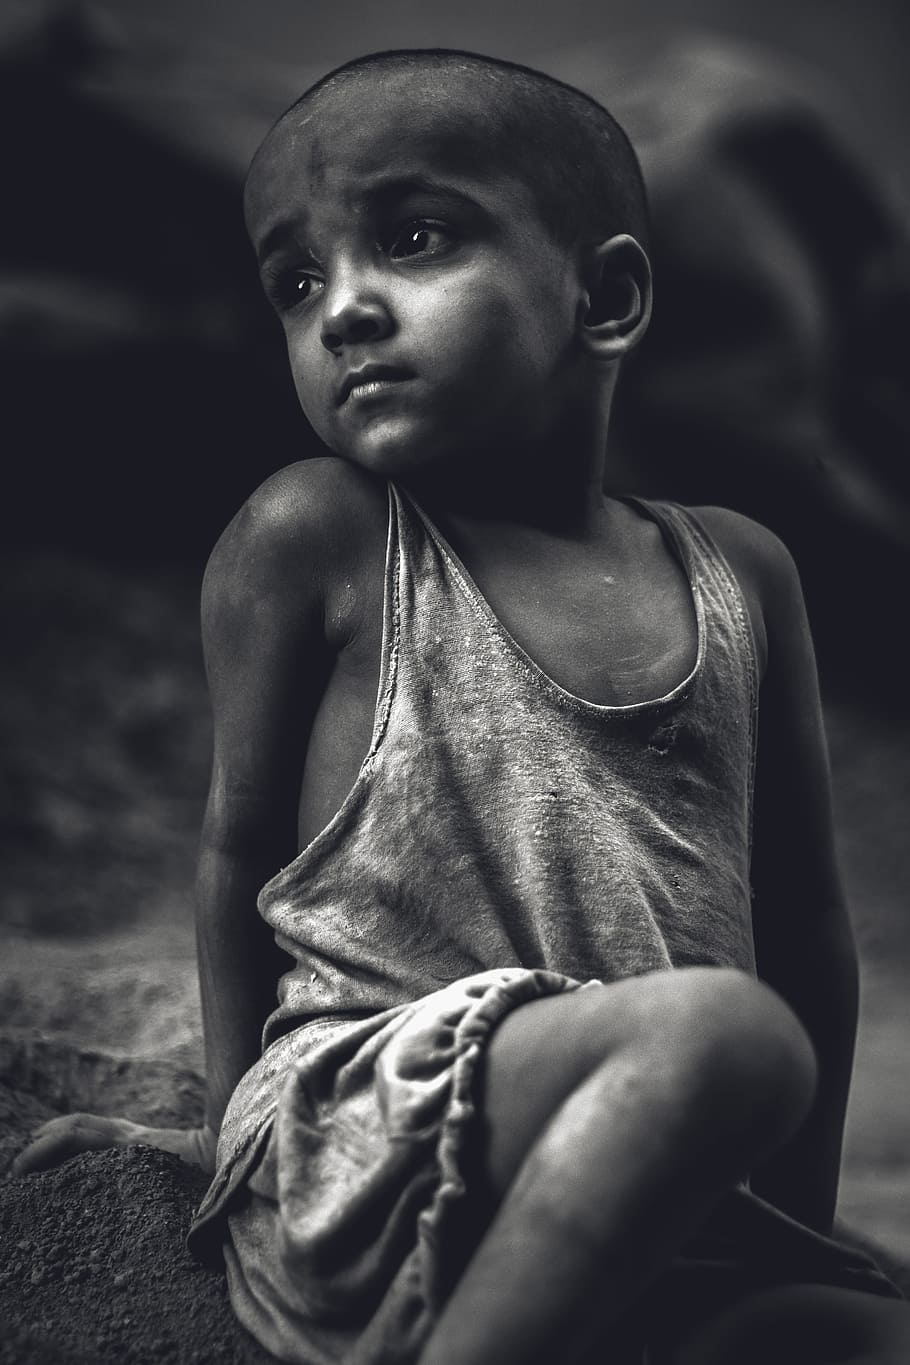 boy wearing gray tank top, child, portrait, black and white, kid